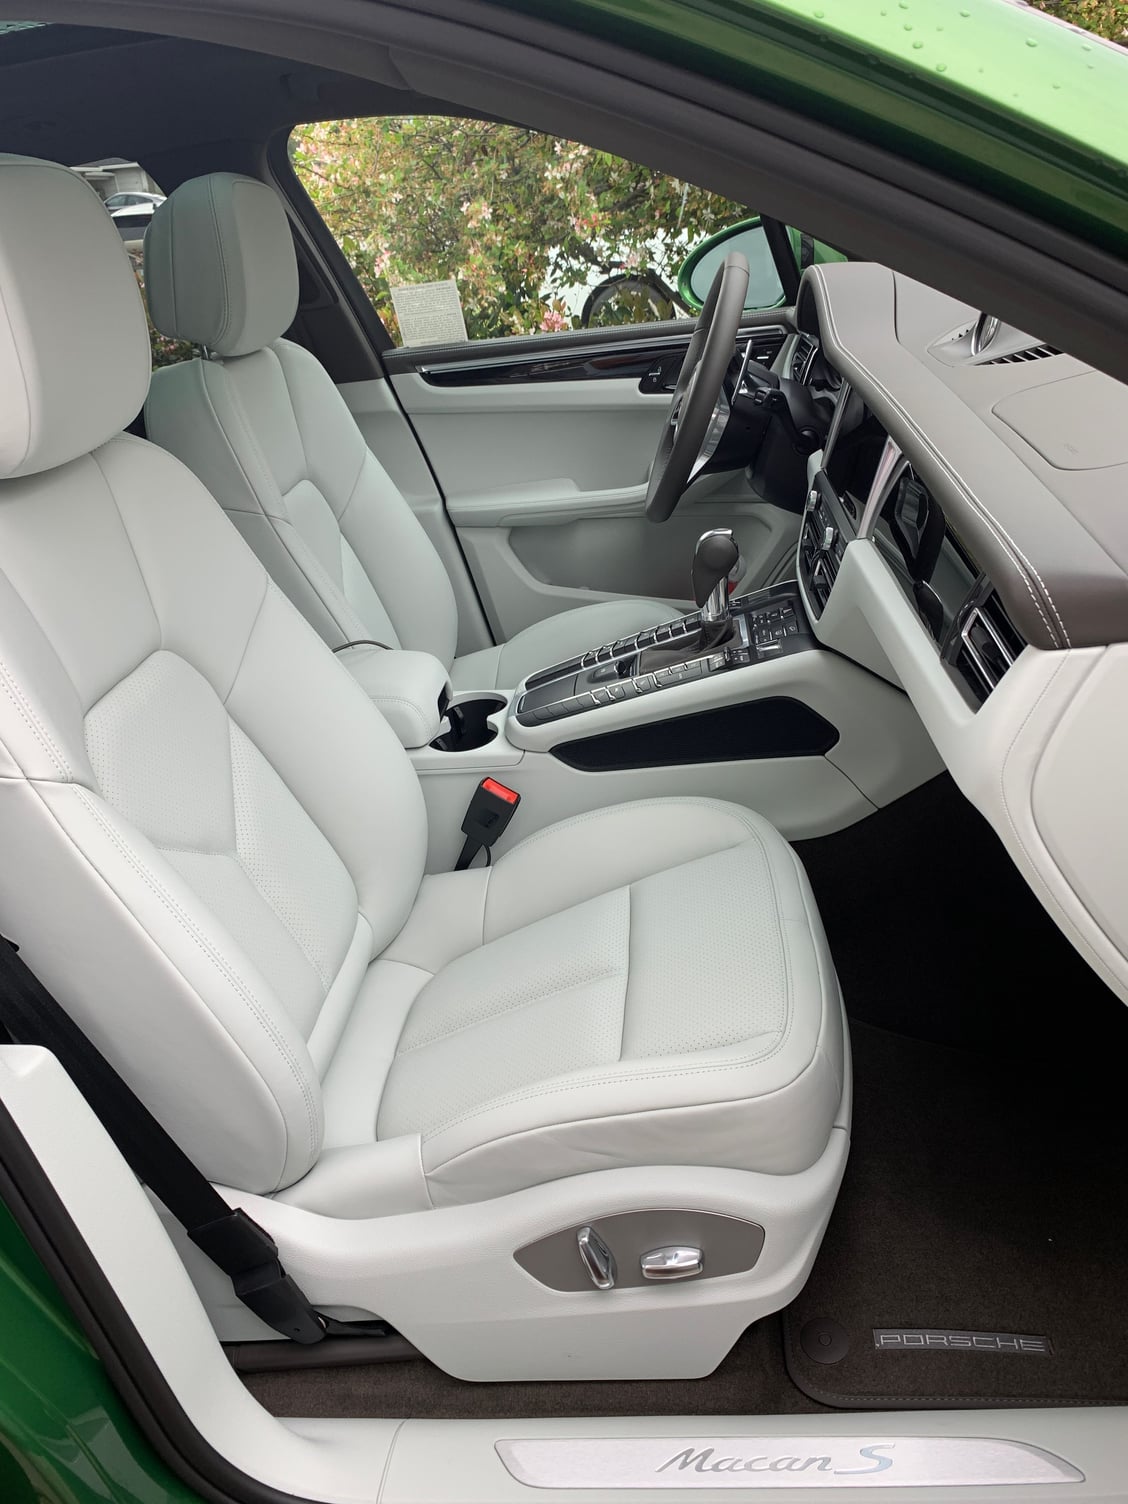 New mamba green Macan S is here - Rennlist - Porsche Discussion Forums